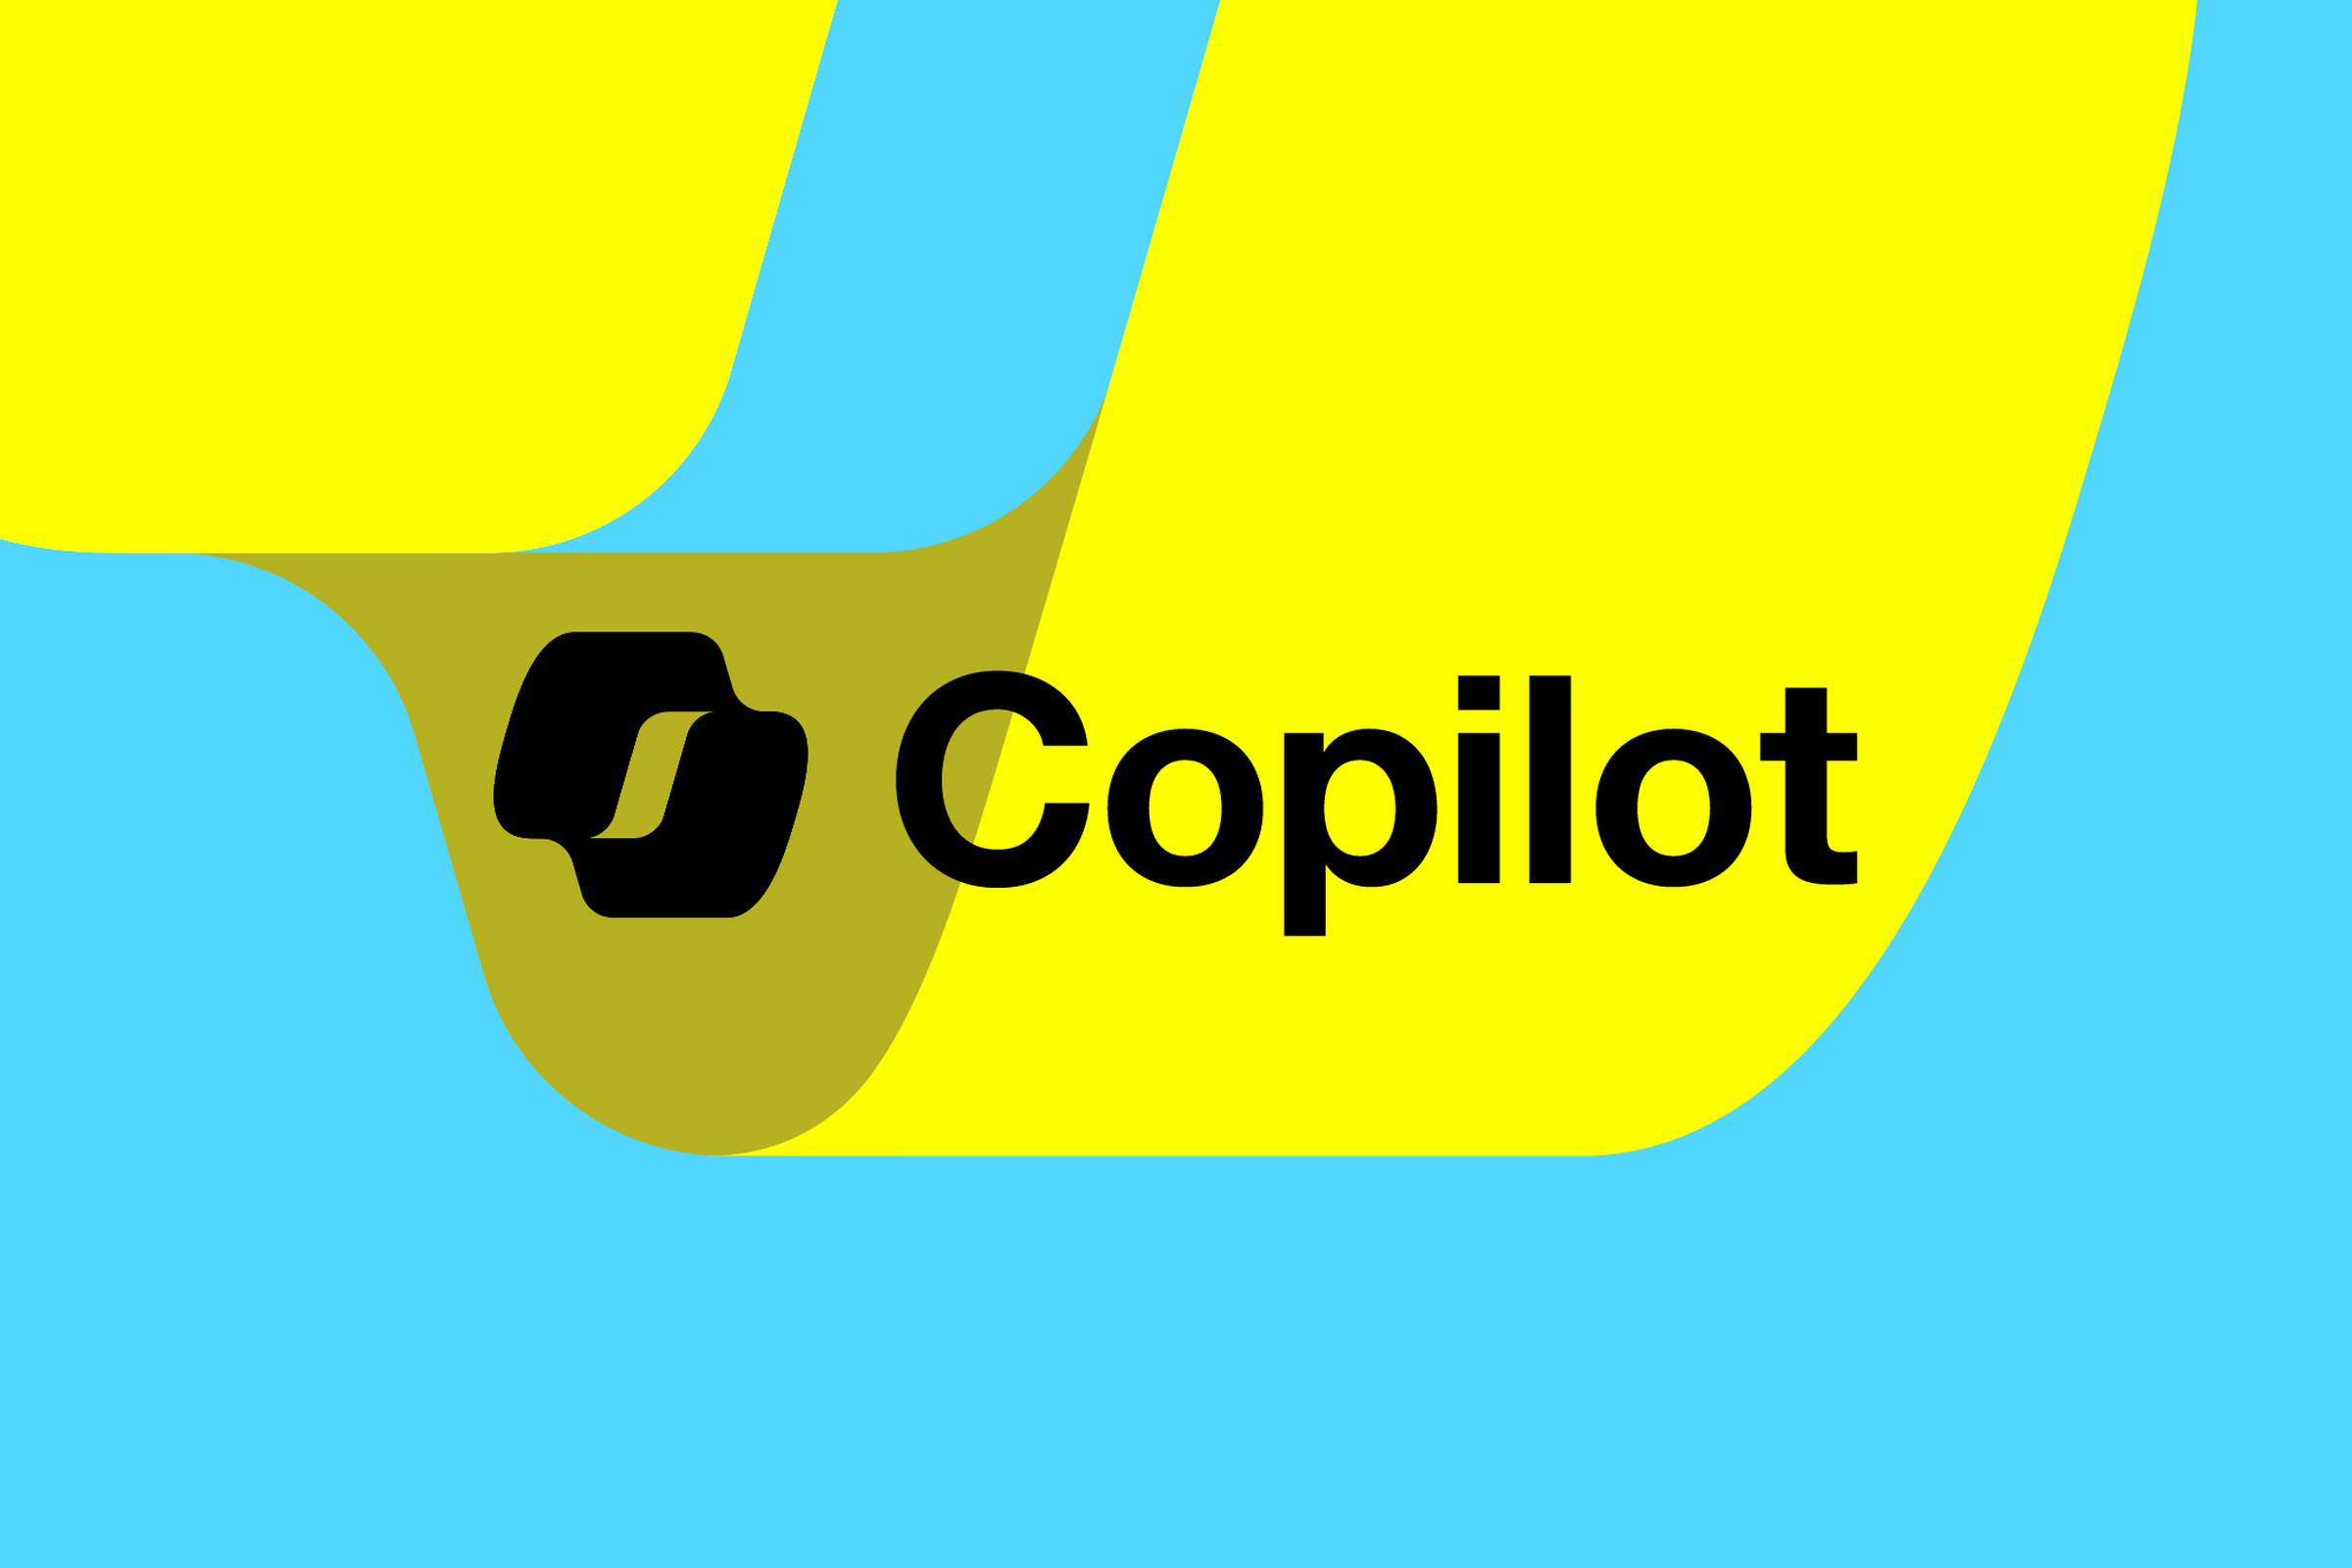 Vector illustration of the Microsoft Copilot logo.